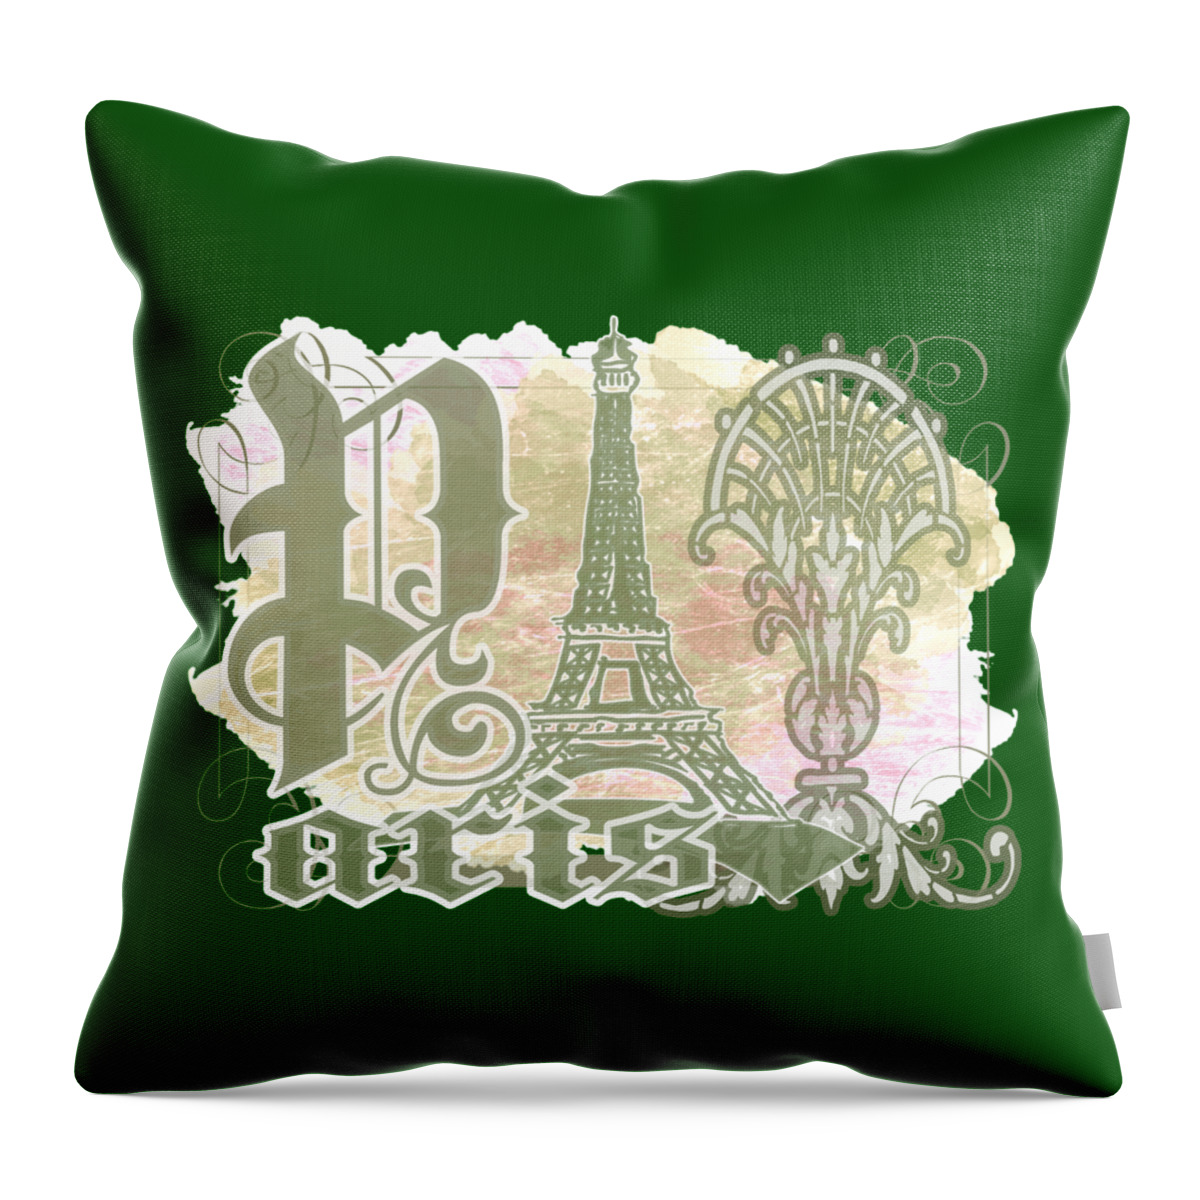 Paris Green Throw Pillow featuring the digital art Paris Green War Memorial Day by Delynn Addams